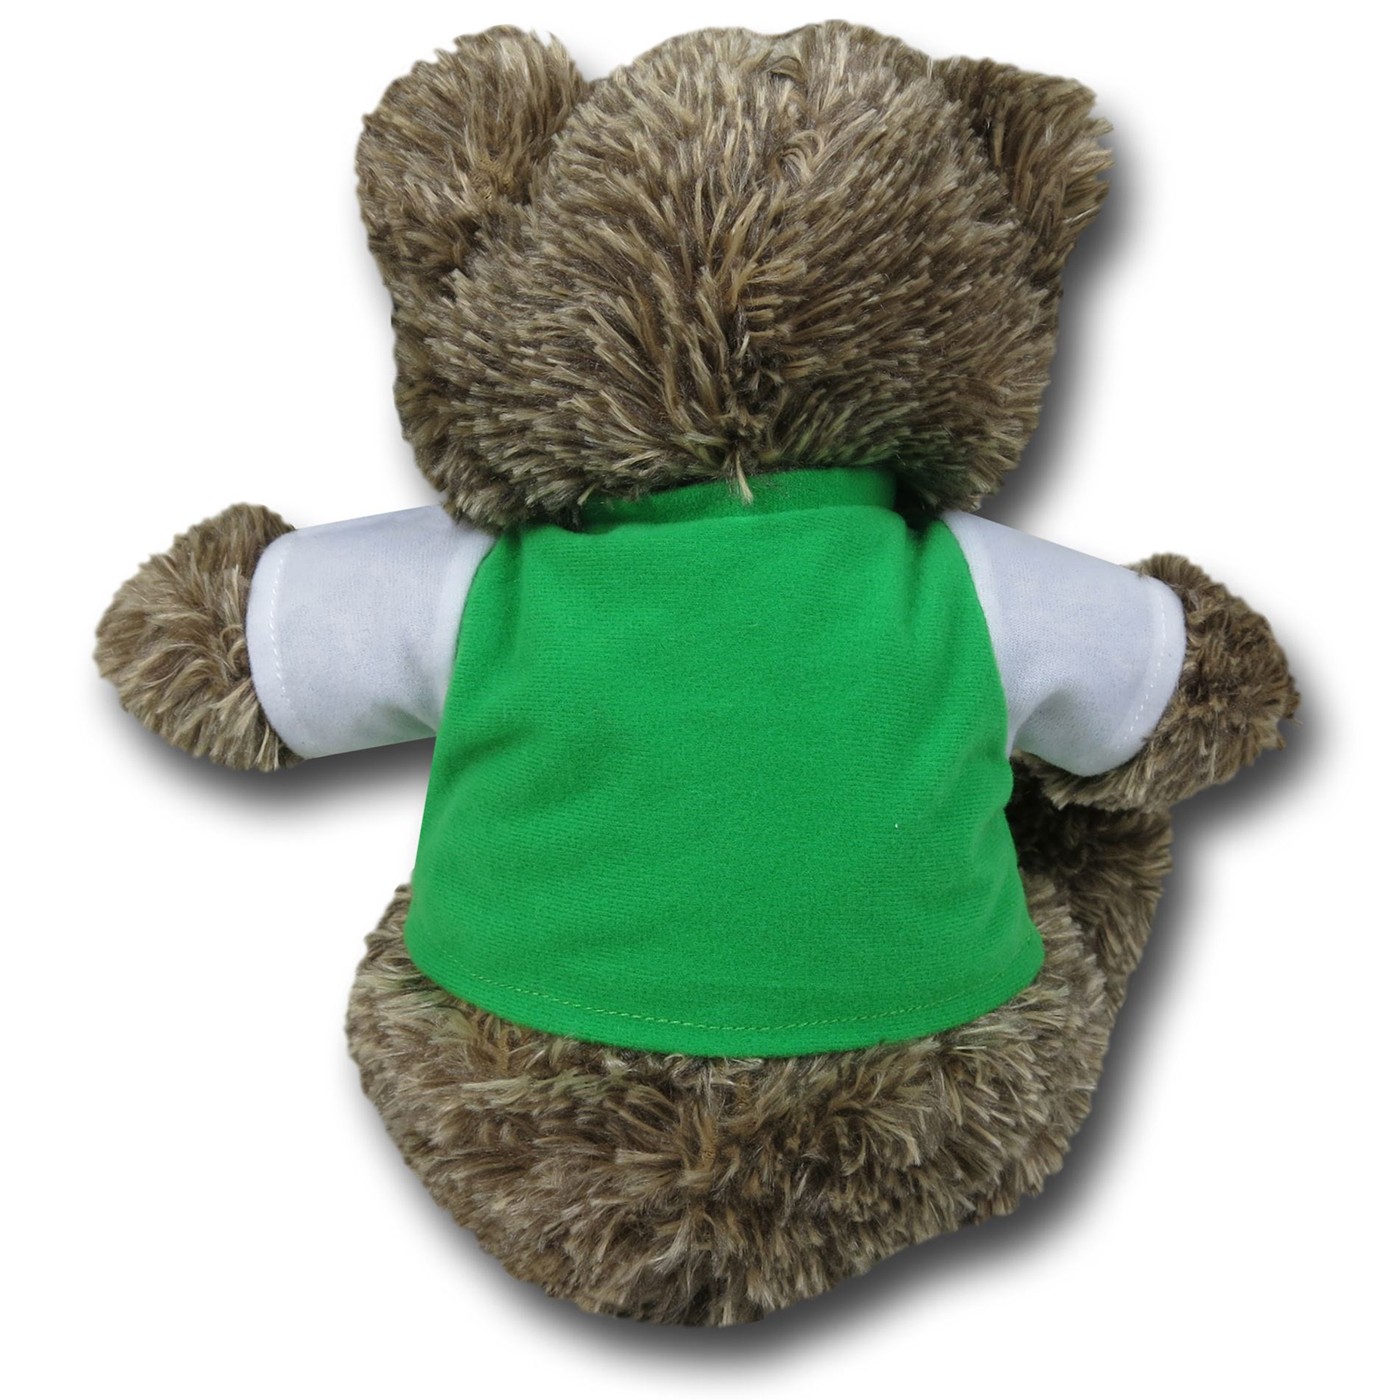 Green Lantern Plush Bear